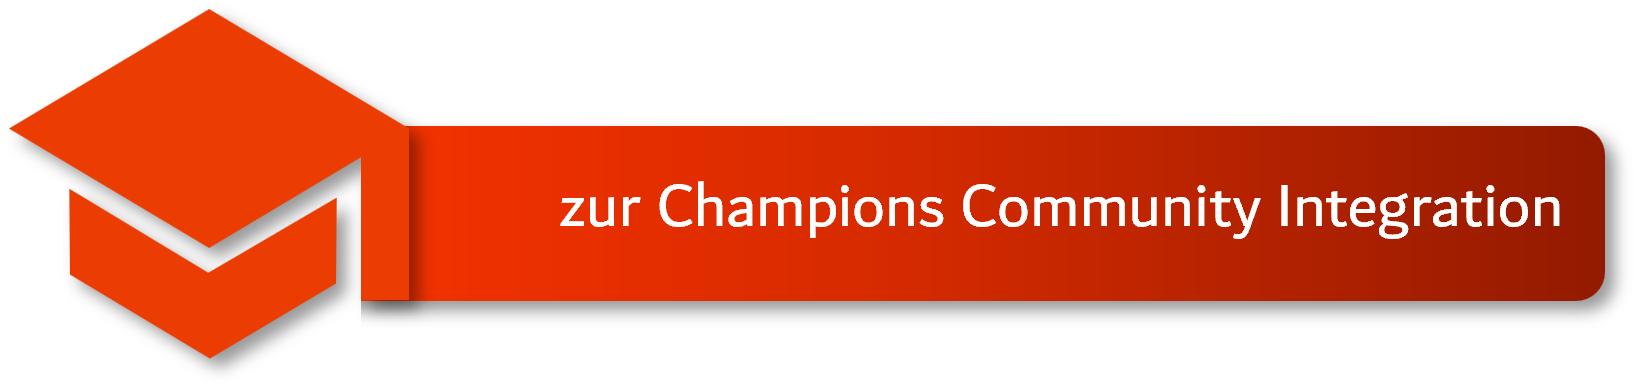 Button zur Champions Community Integration